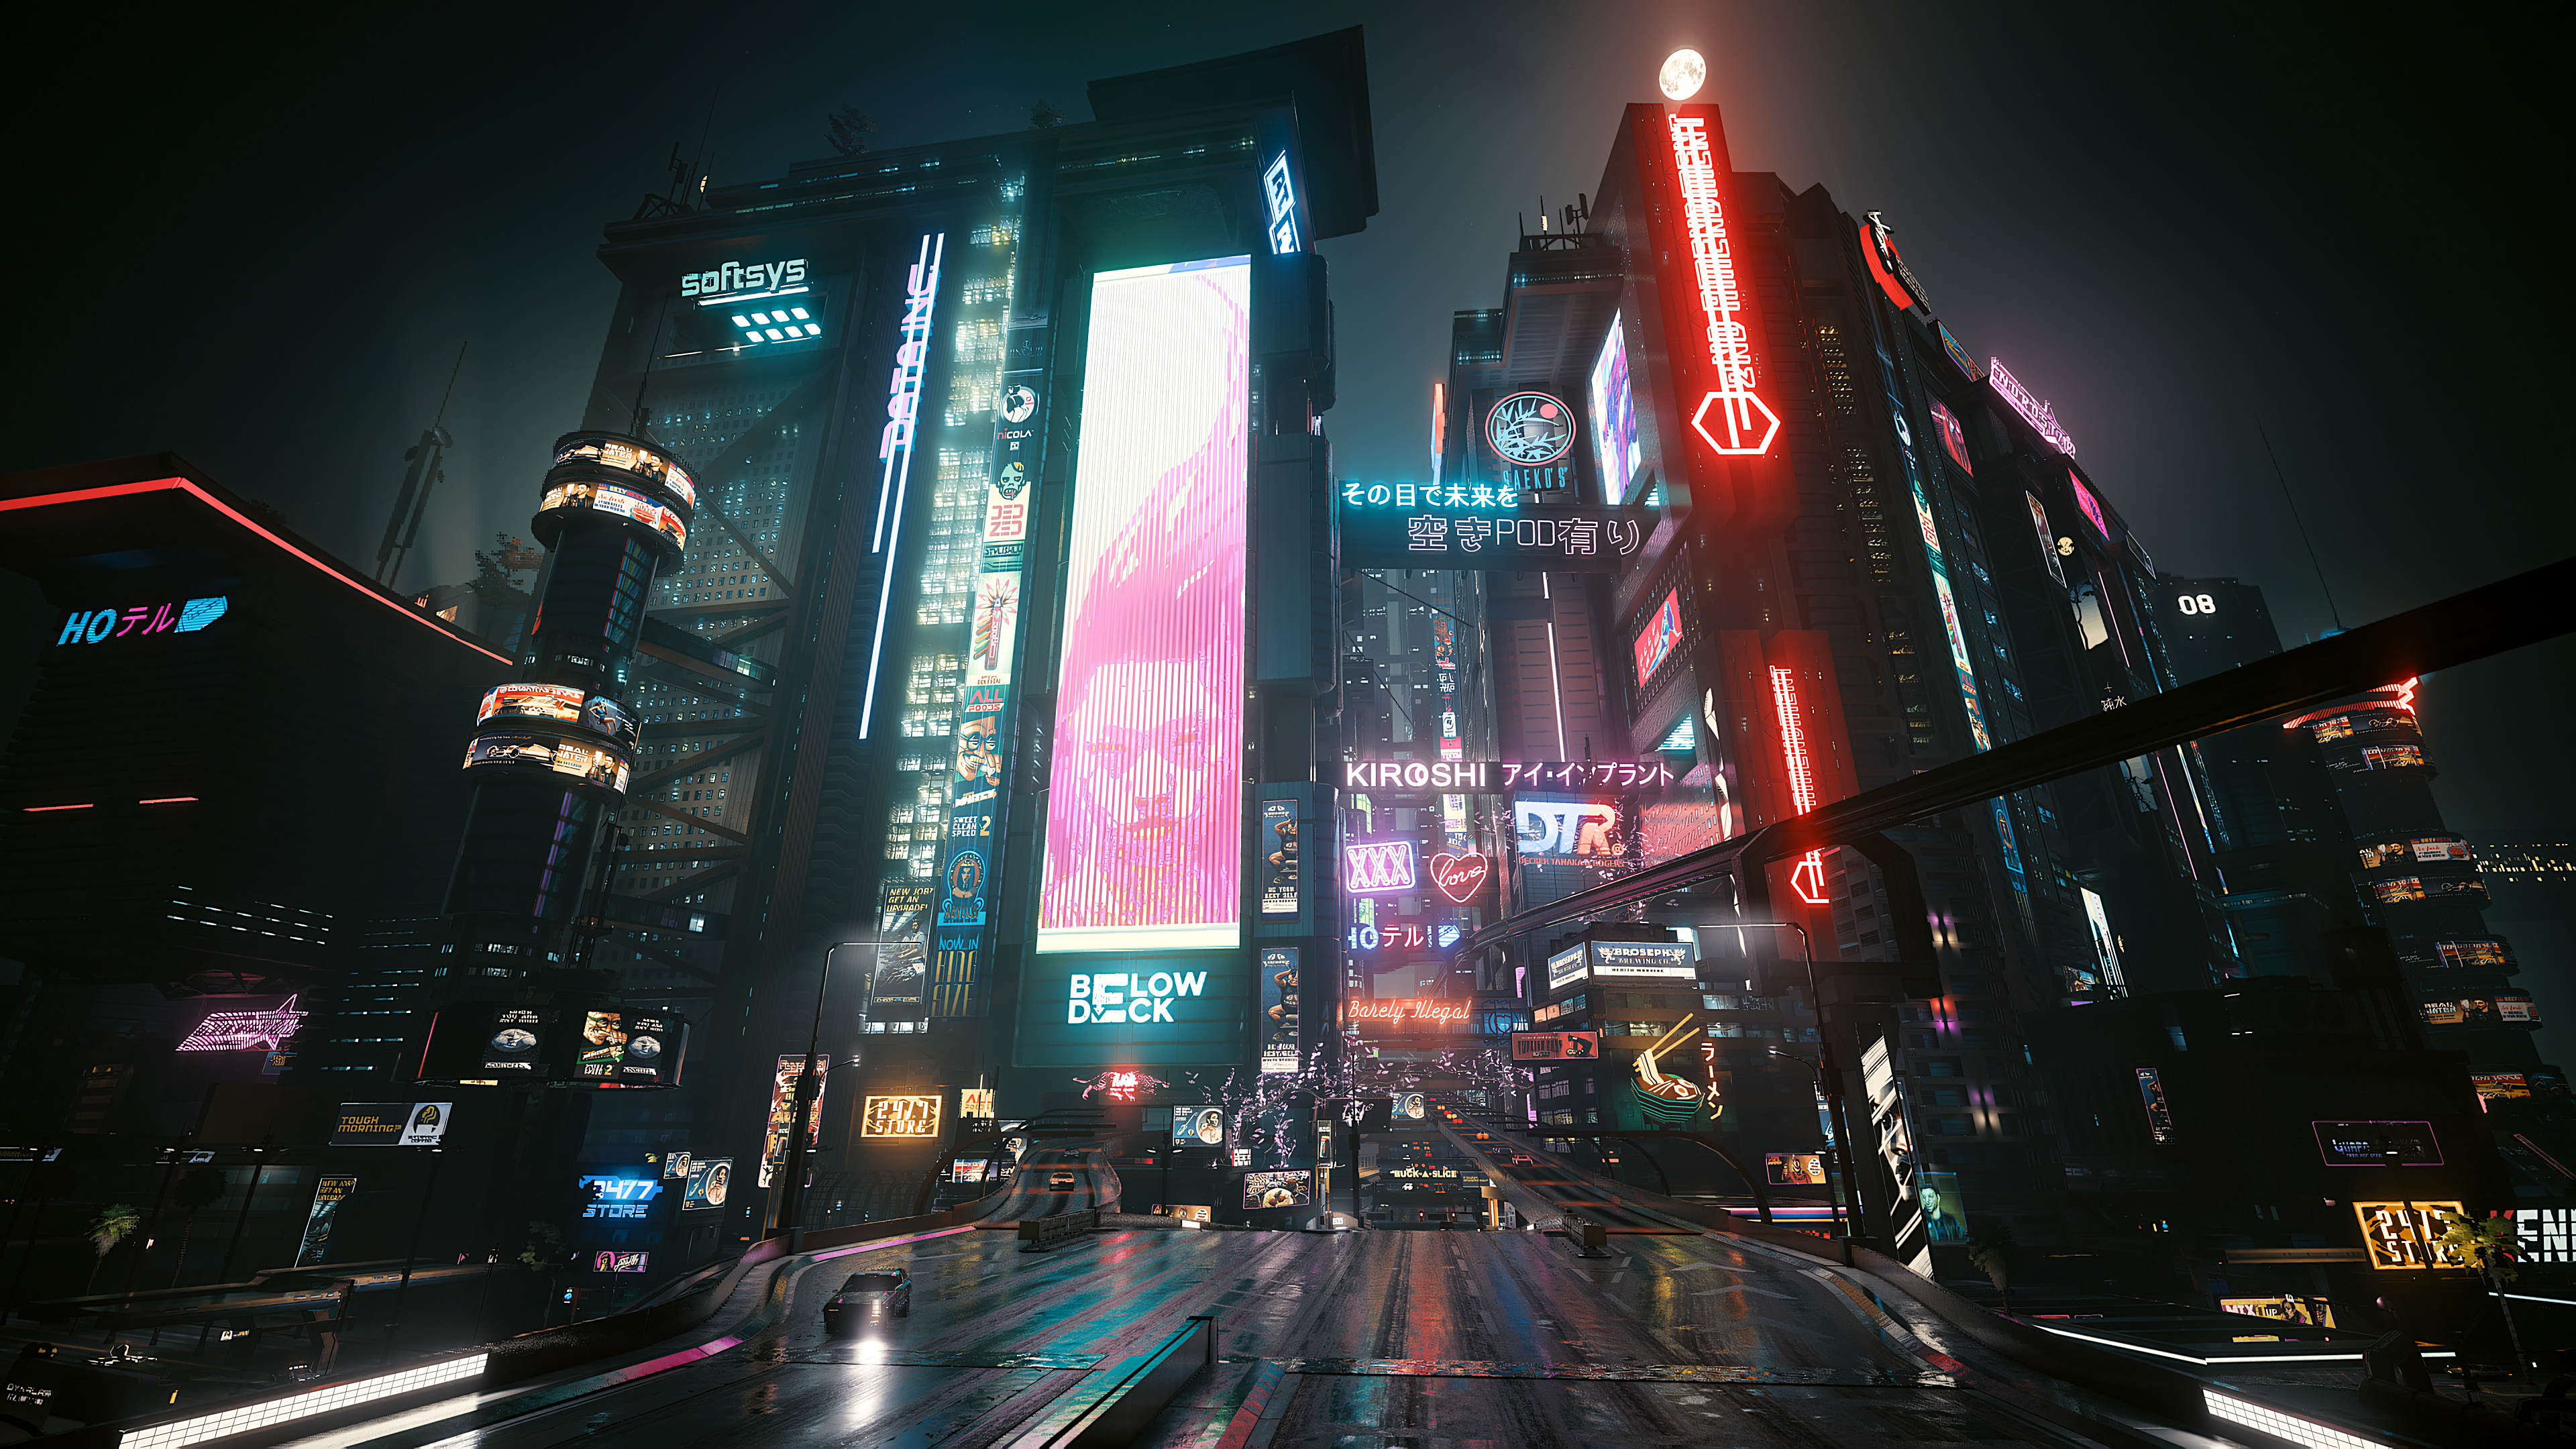 General 3840x2160 city futuristic futurism science fiction fictional cyberpunk Cyberpunk 2077 car wet road dark night video games video game art neon lights entertainment